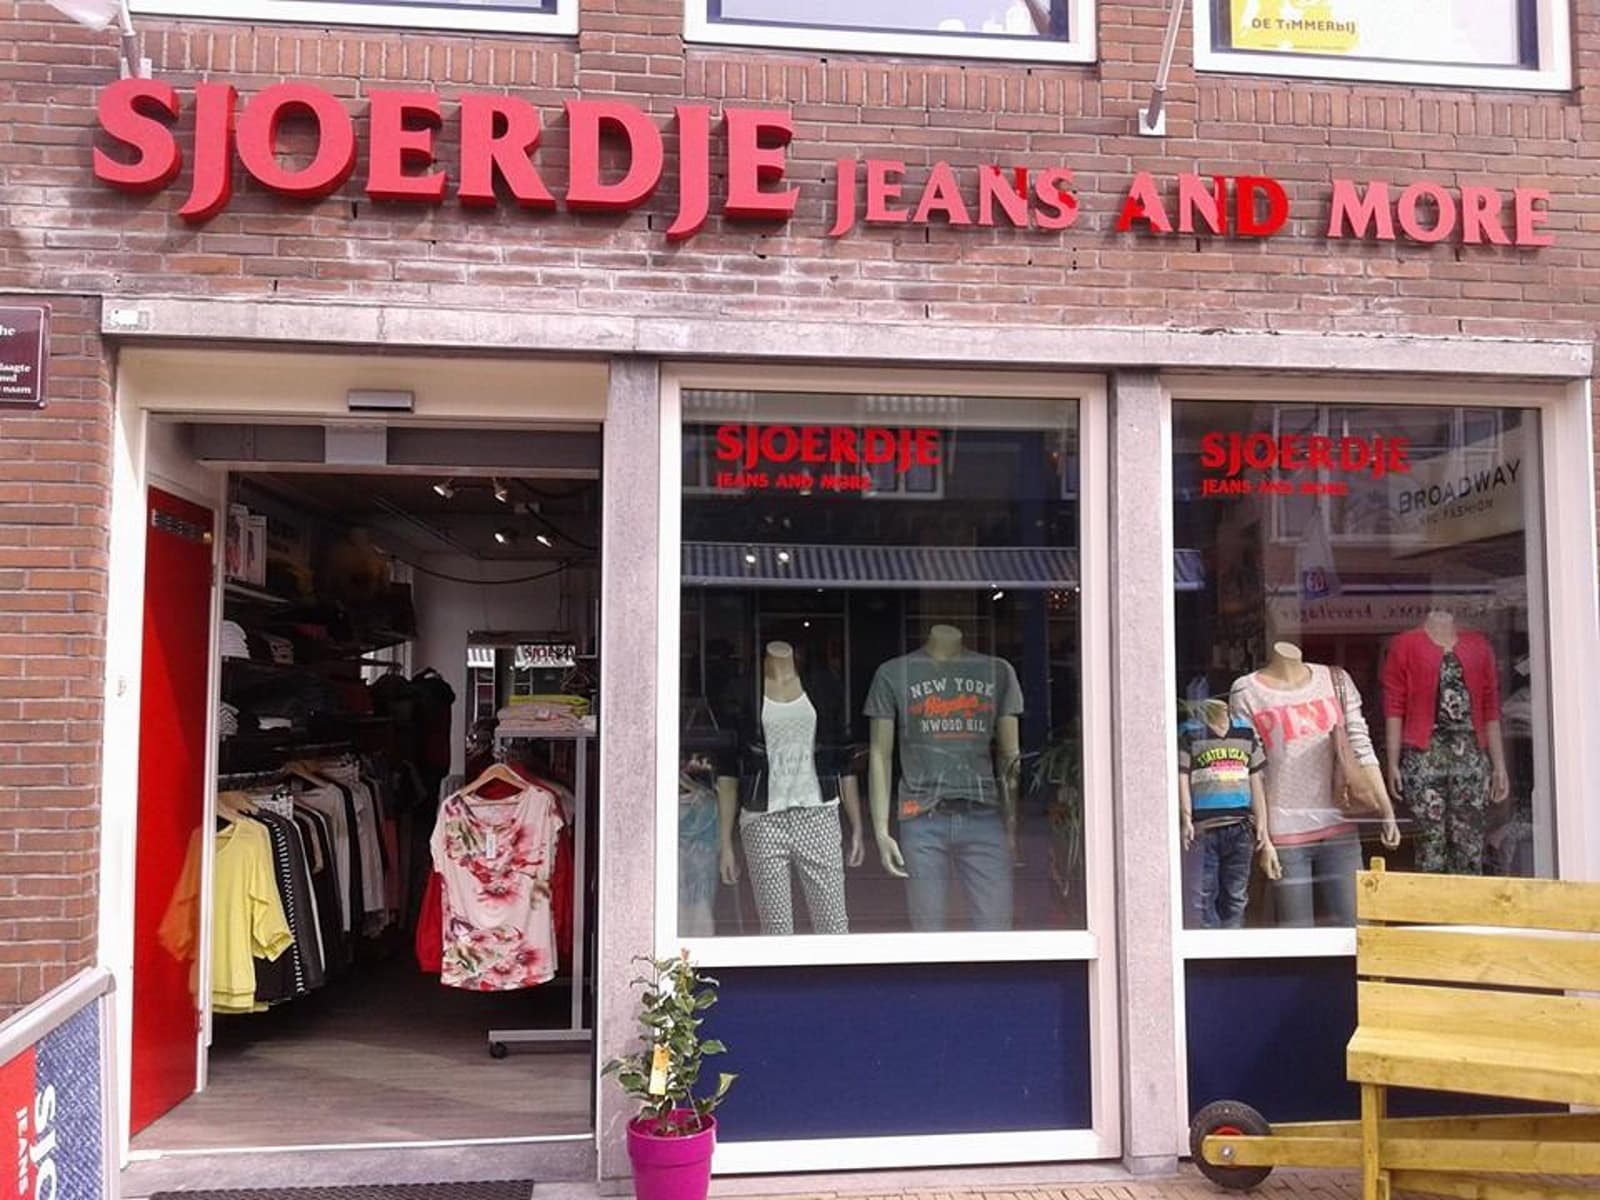 Sjoerdje Jeans and more 4 3